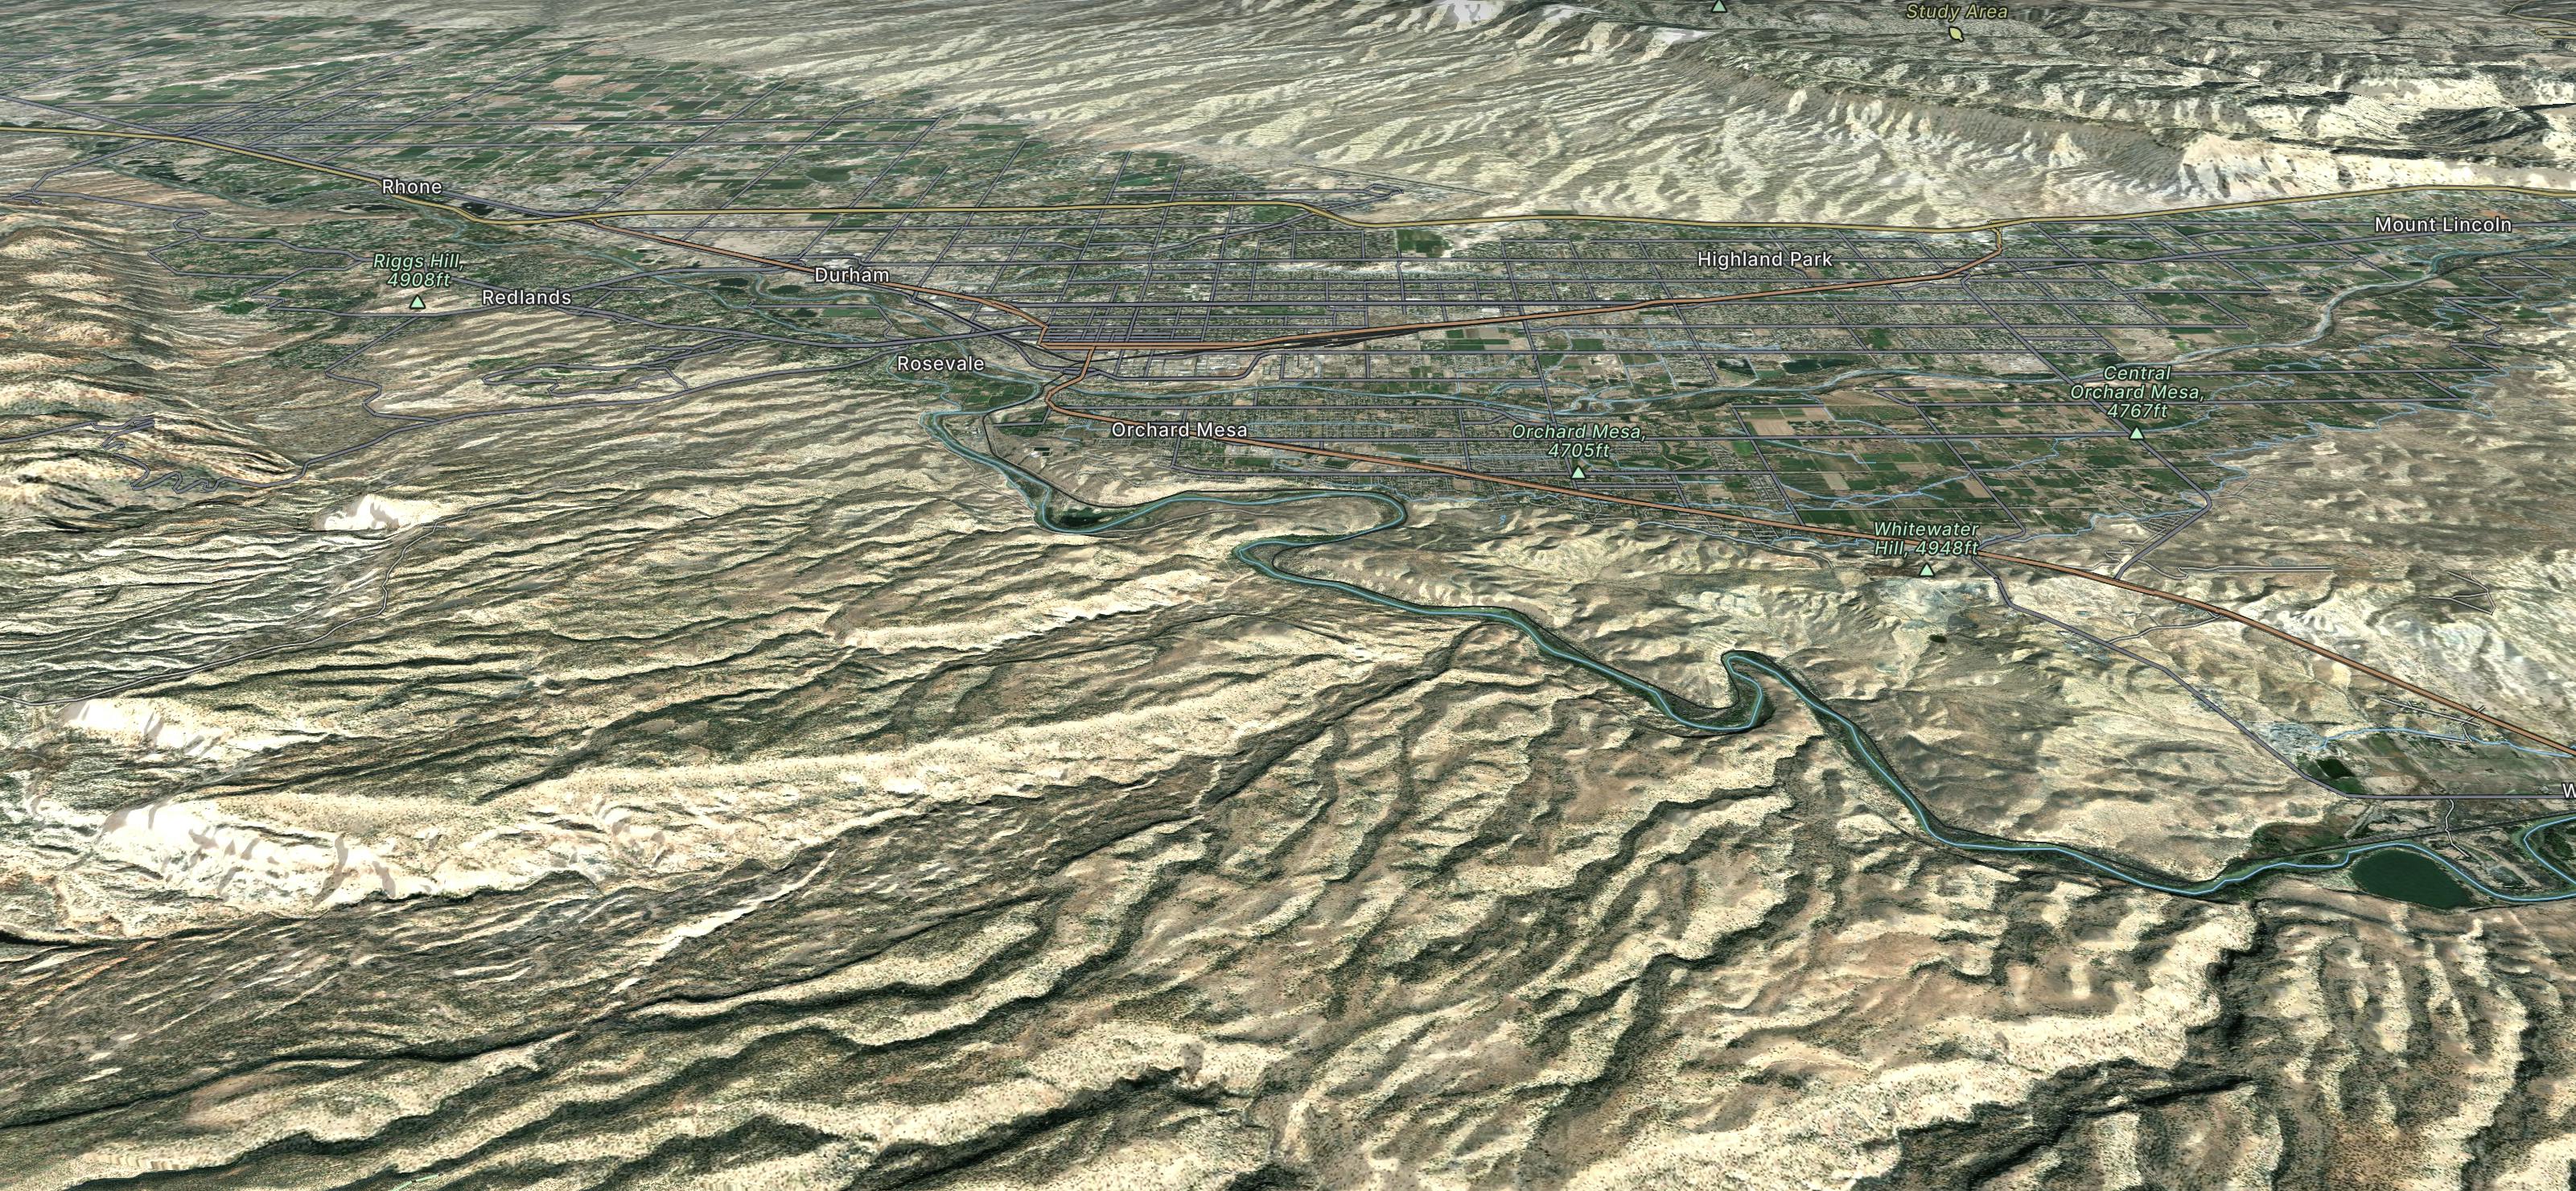 Grand Junction Map